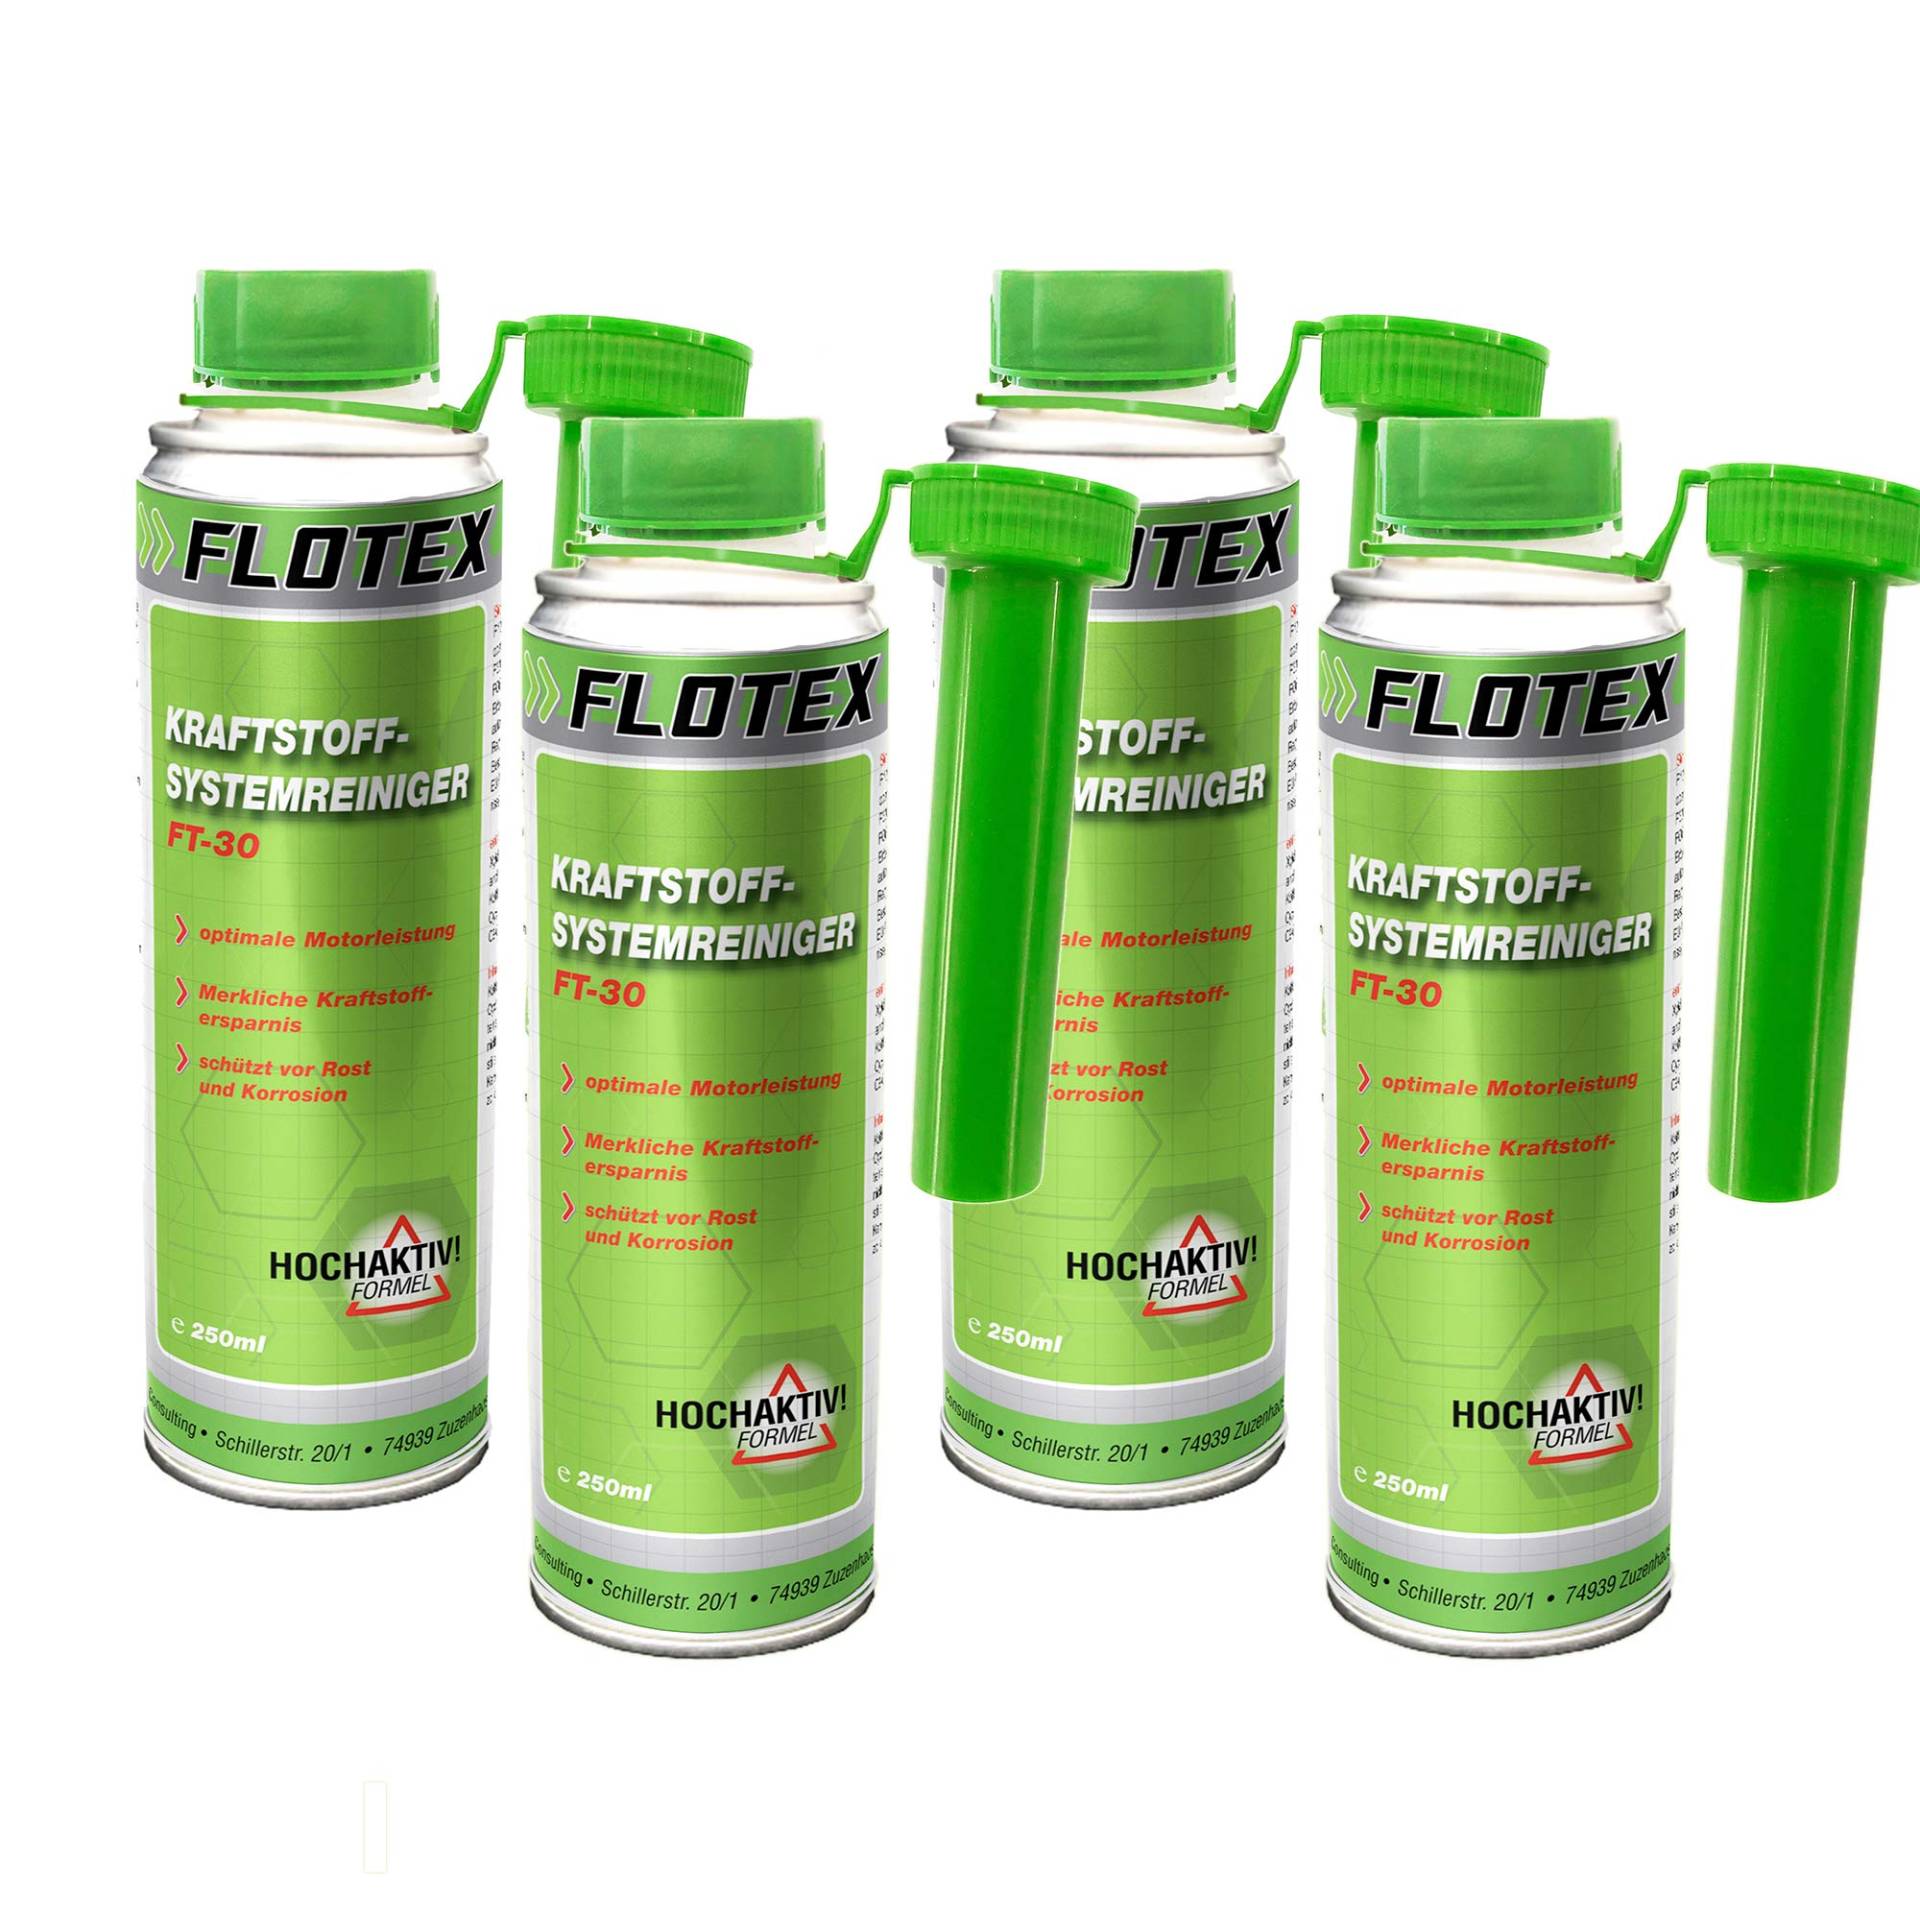 Flotex Kraftstoffsystemreiniger, 4 x 250ml Additiv Reiniger Kraftstoff-System von Flotex